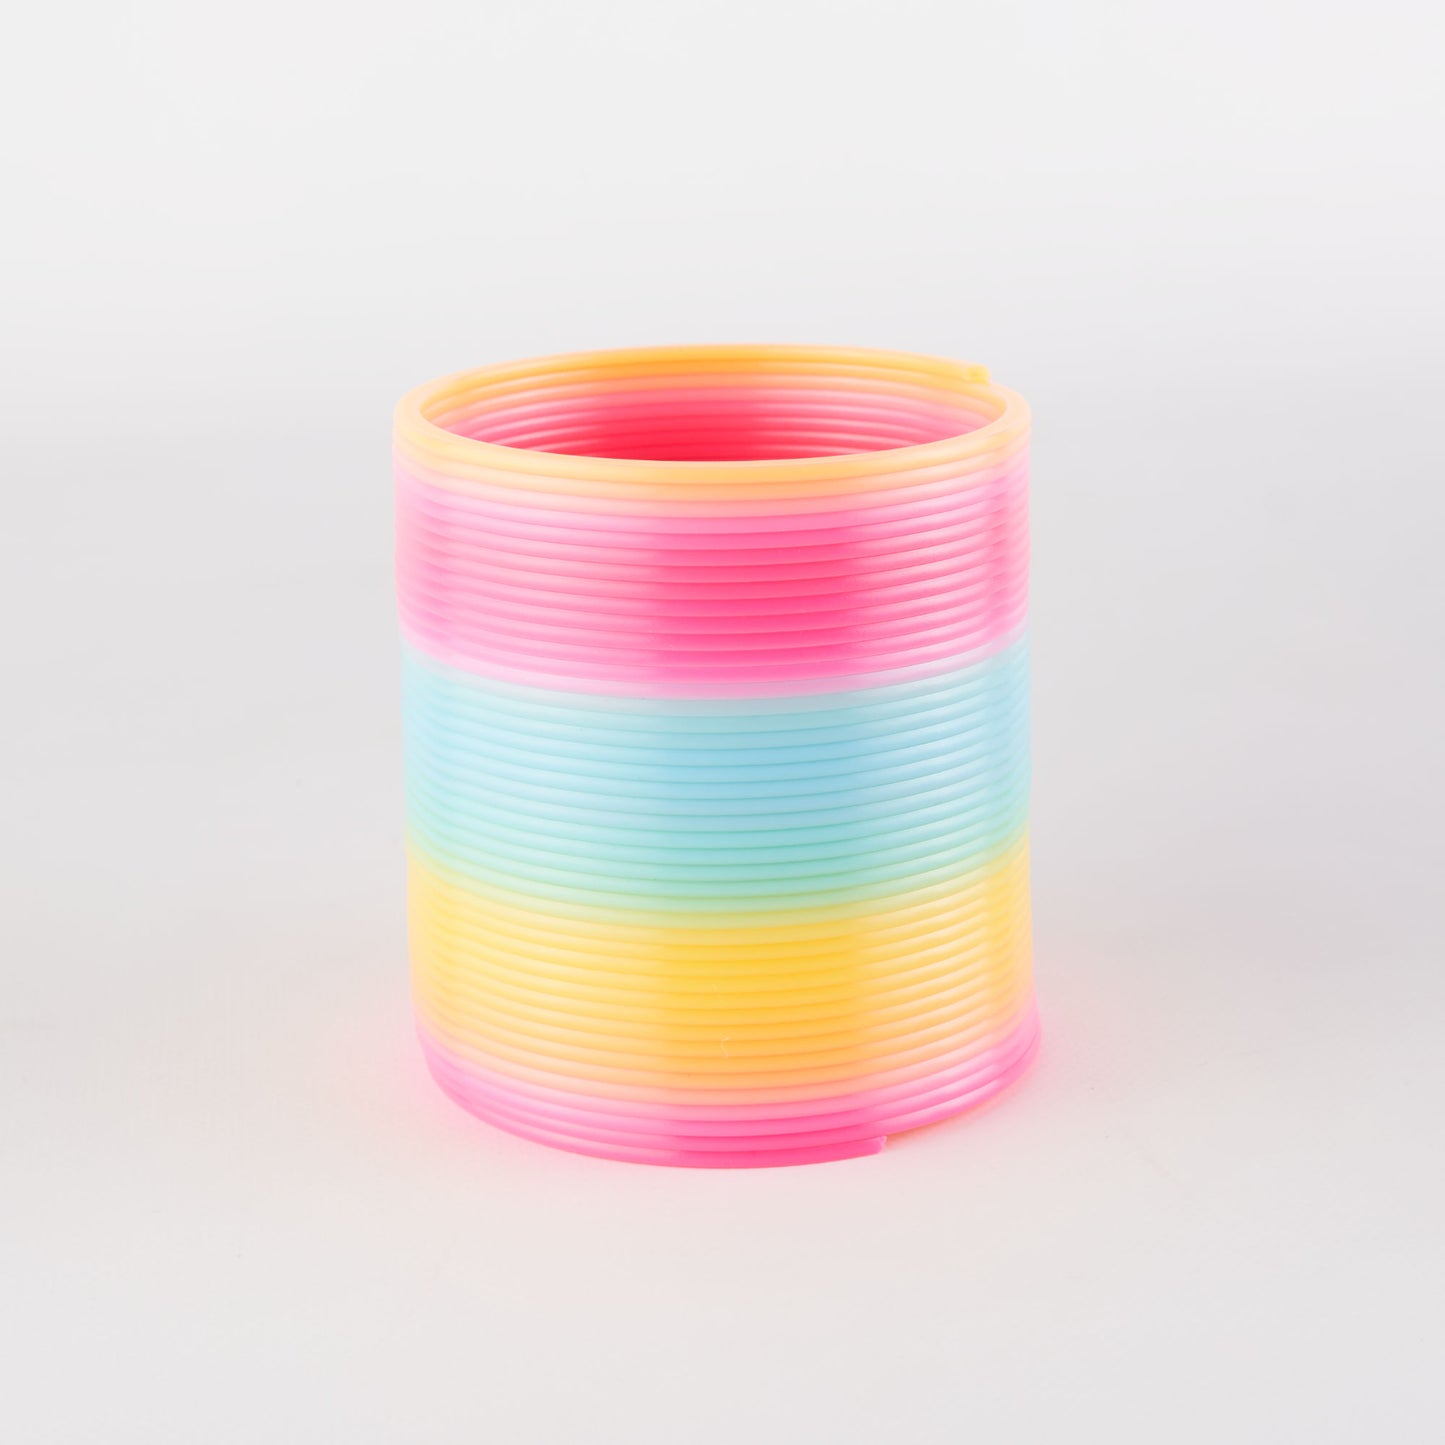 Slinky Spring Rainbow